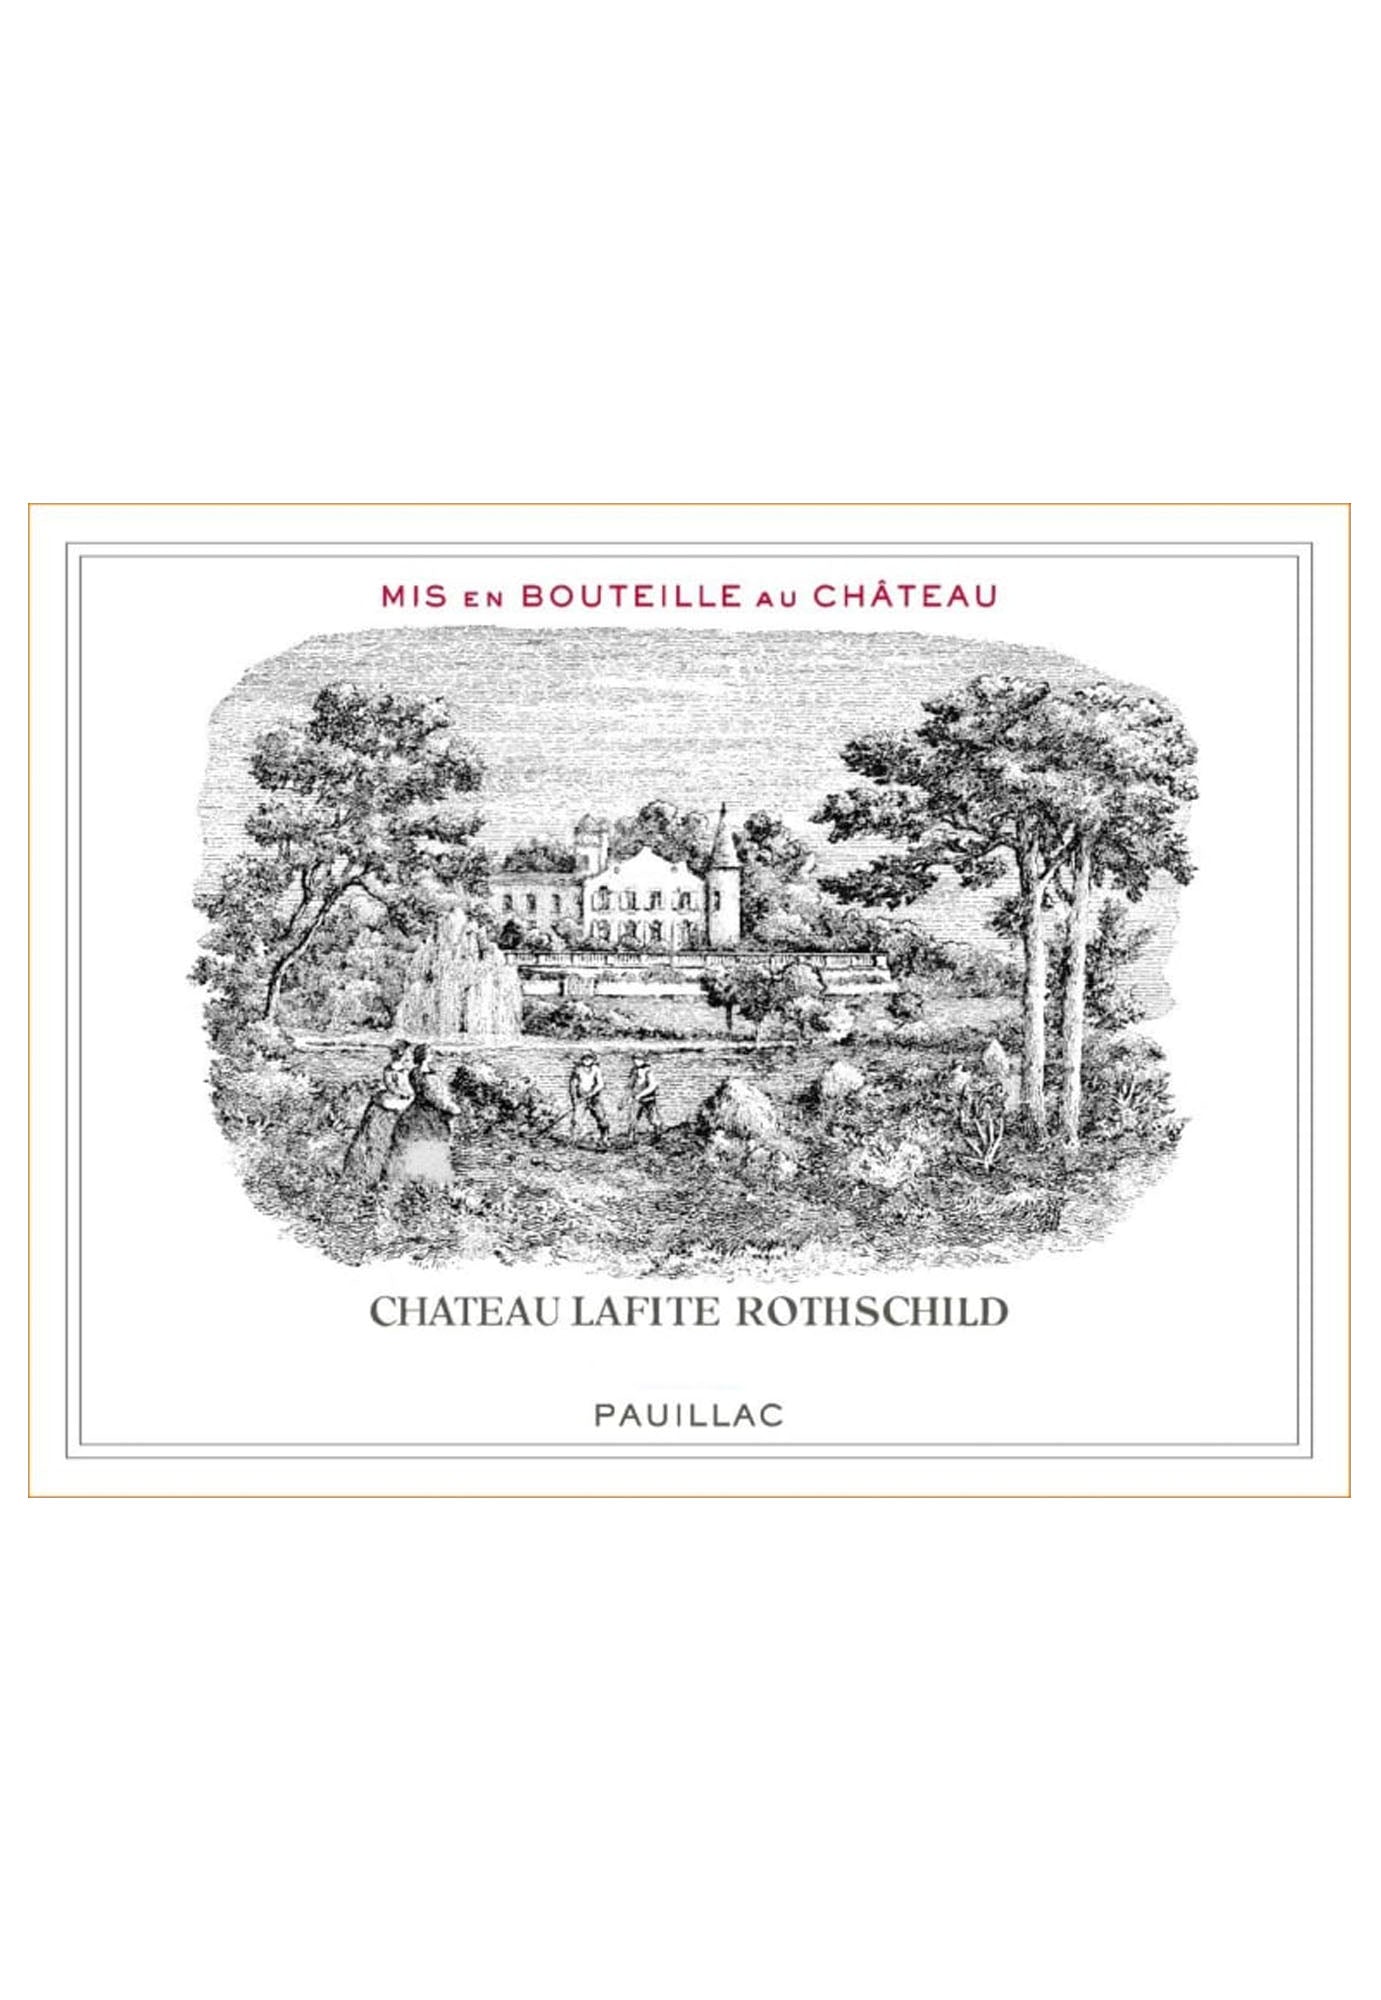 Chateau Lafite Rothschild 2005 - 1.5 Litre Bottle